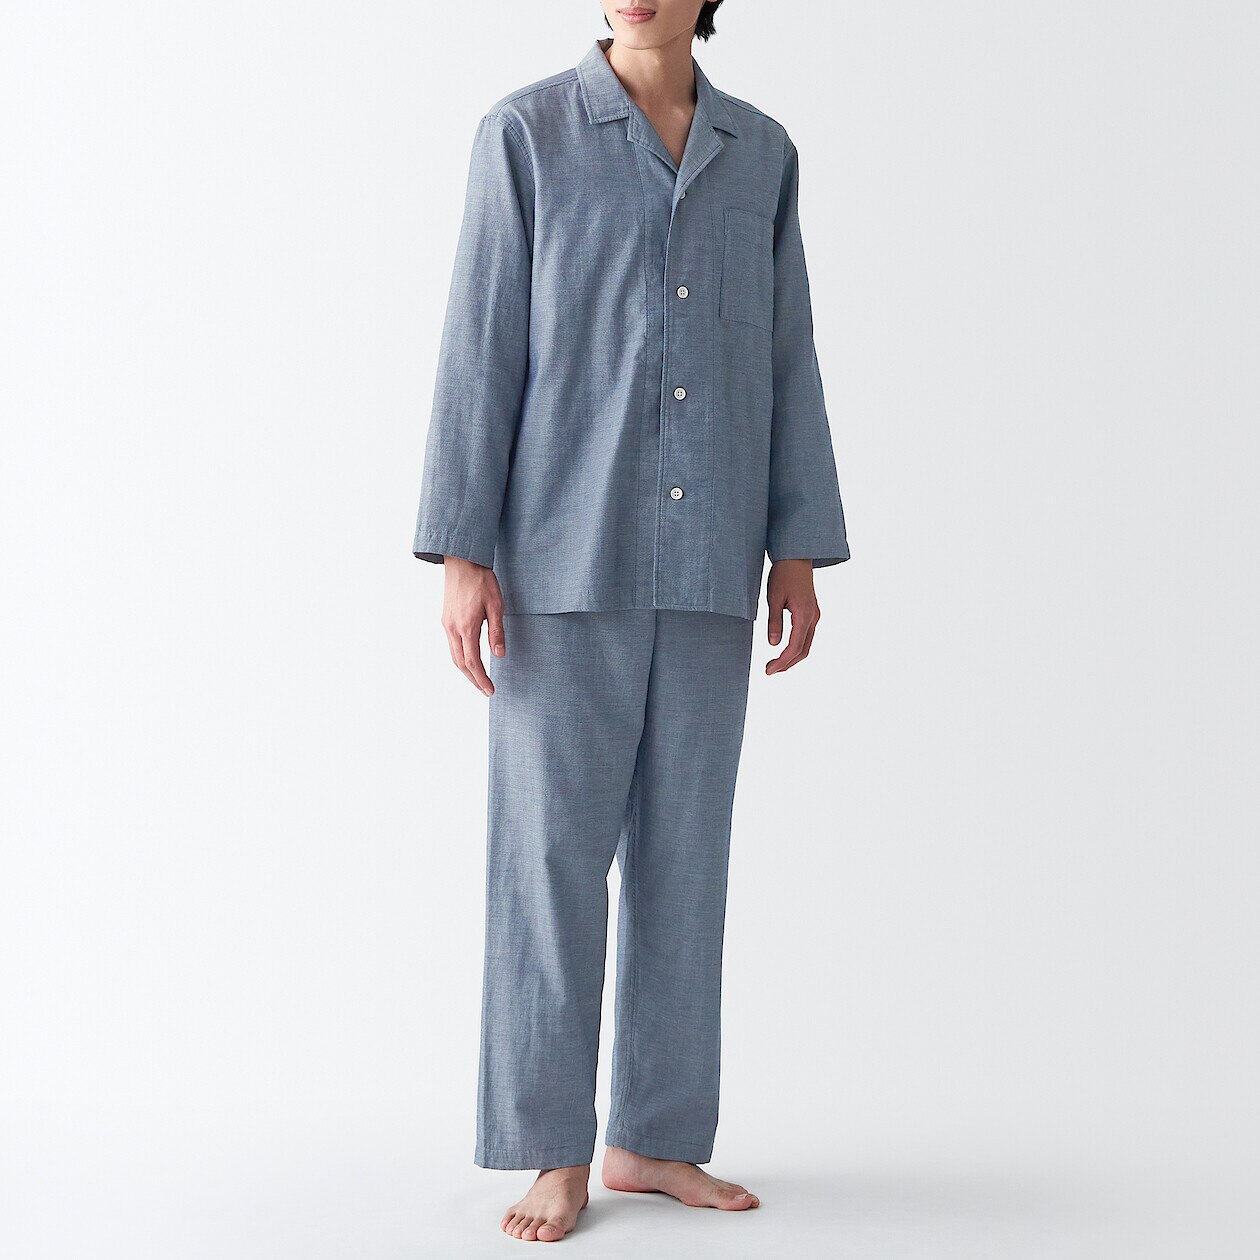 Shop Side Seamless Double Gauze Long Sleeves Pajamas online | Muji Qatar